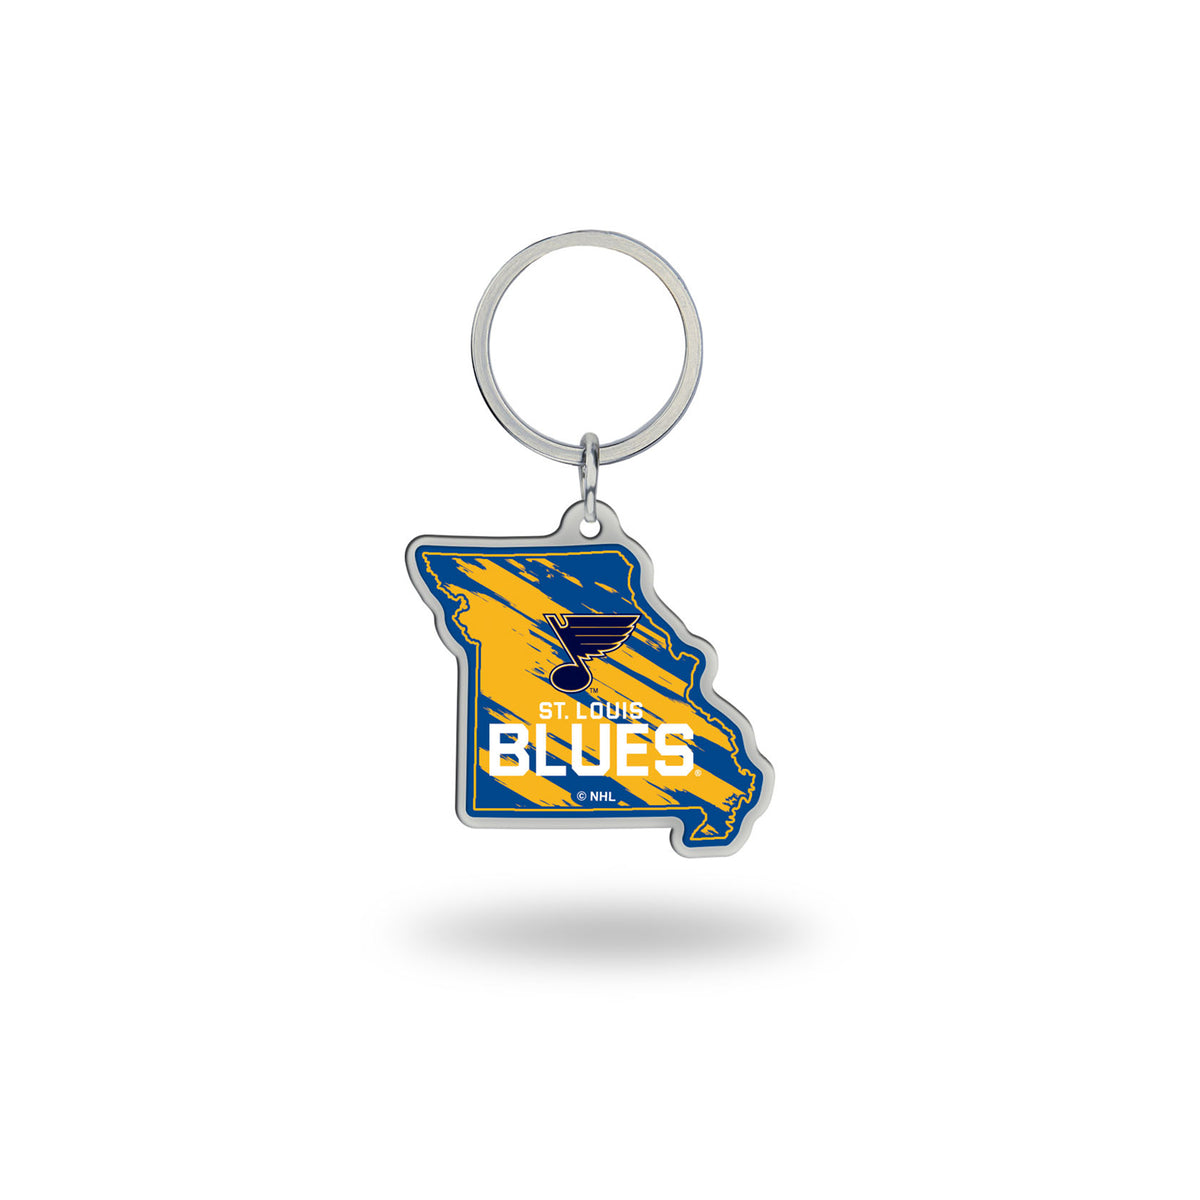 St. Louis Blues - Missouri State Shaped Keychain